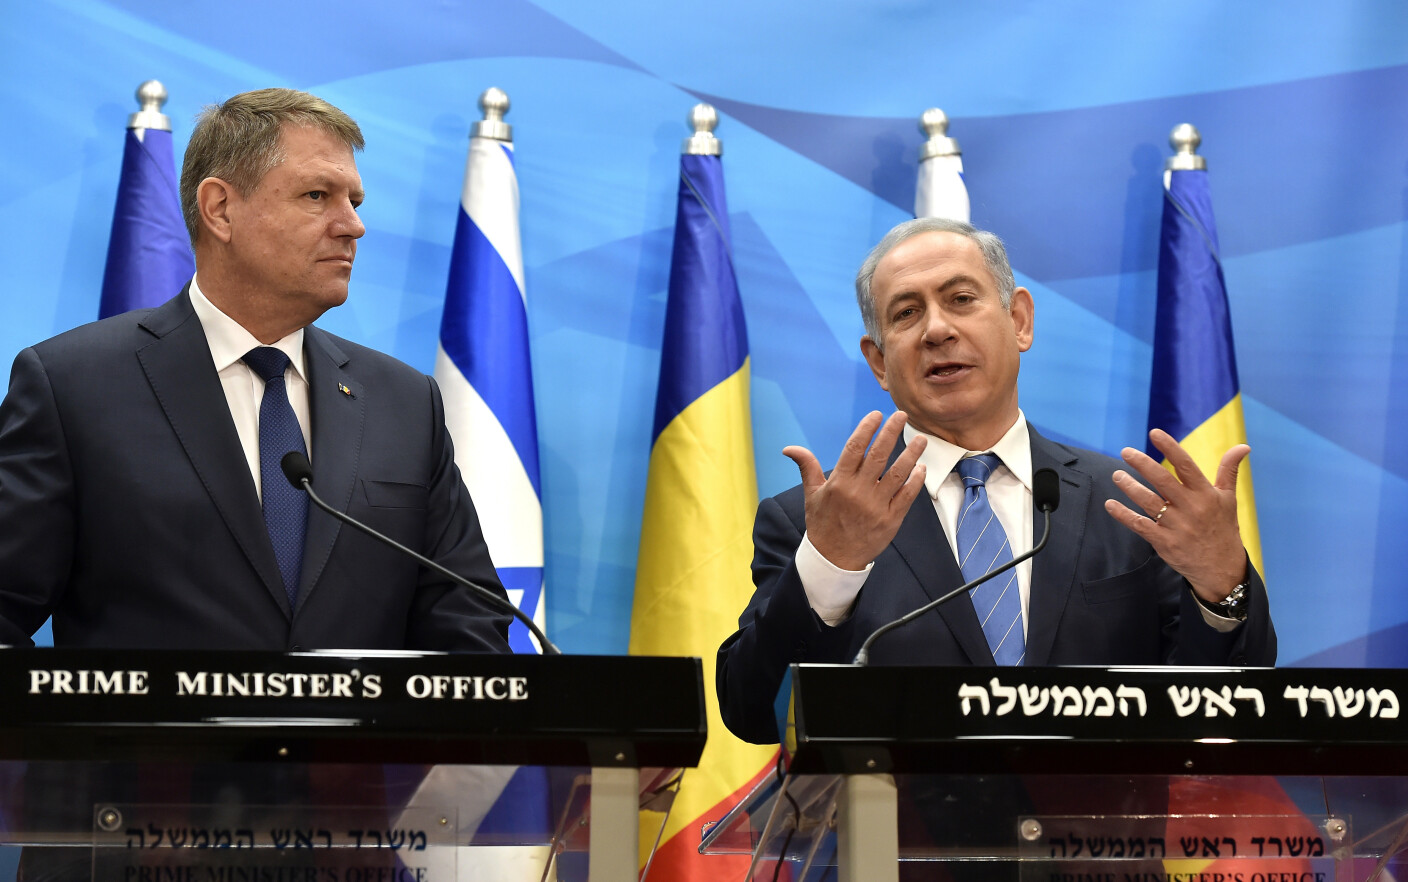 Klaus Iohannis, Benjamin Netanyahu